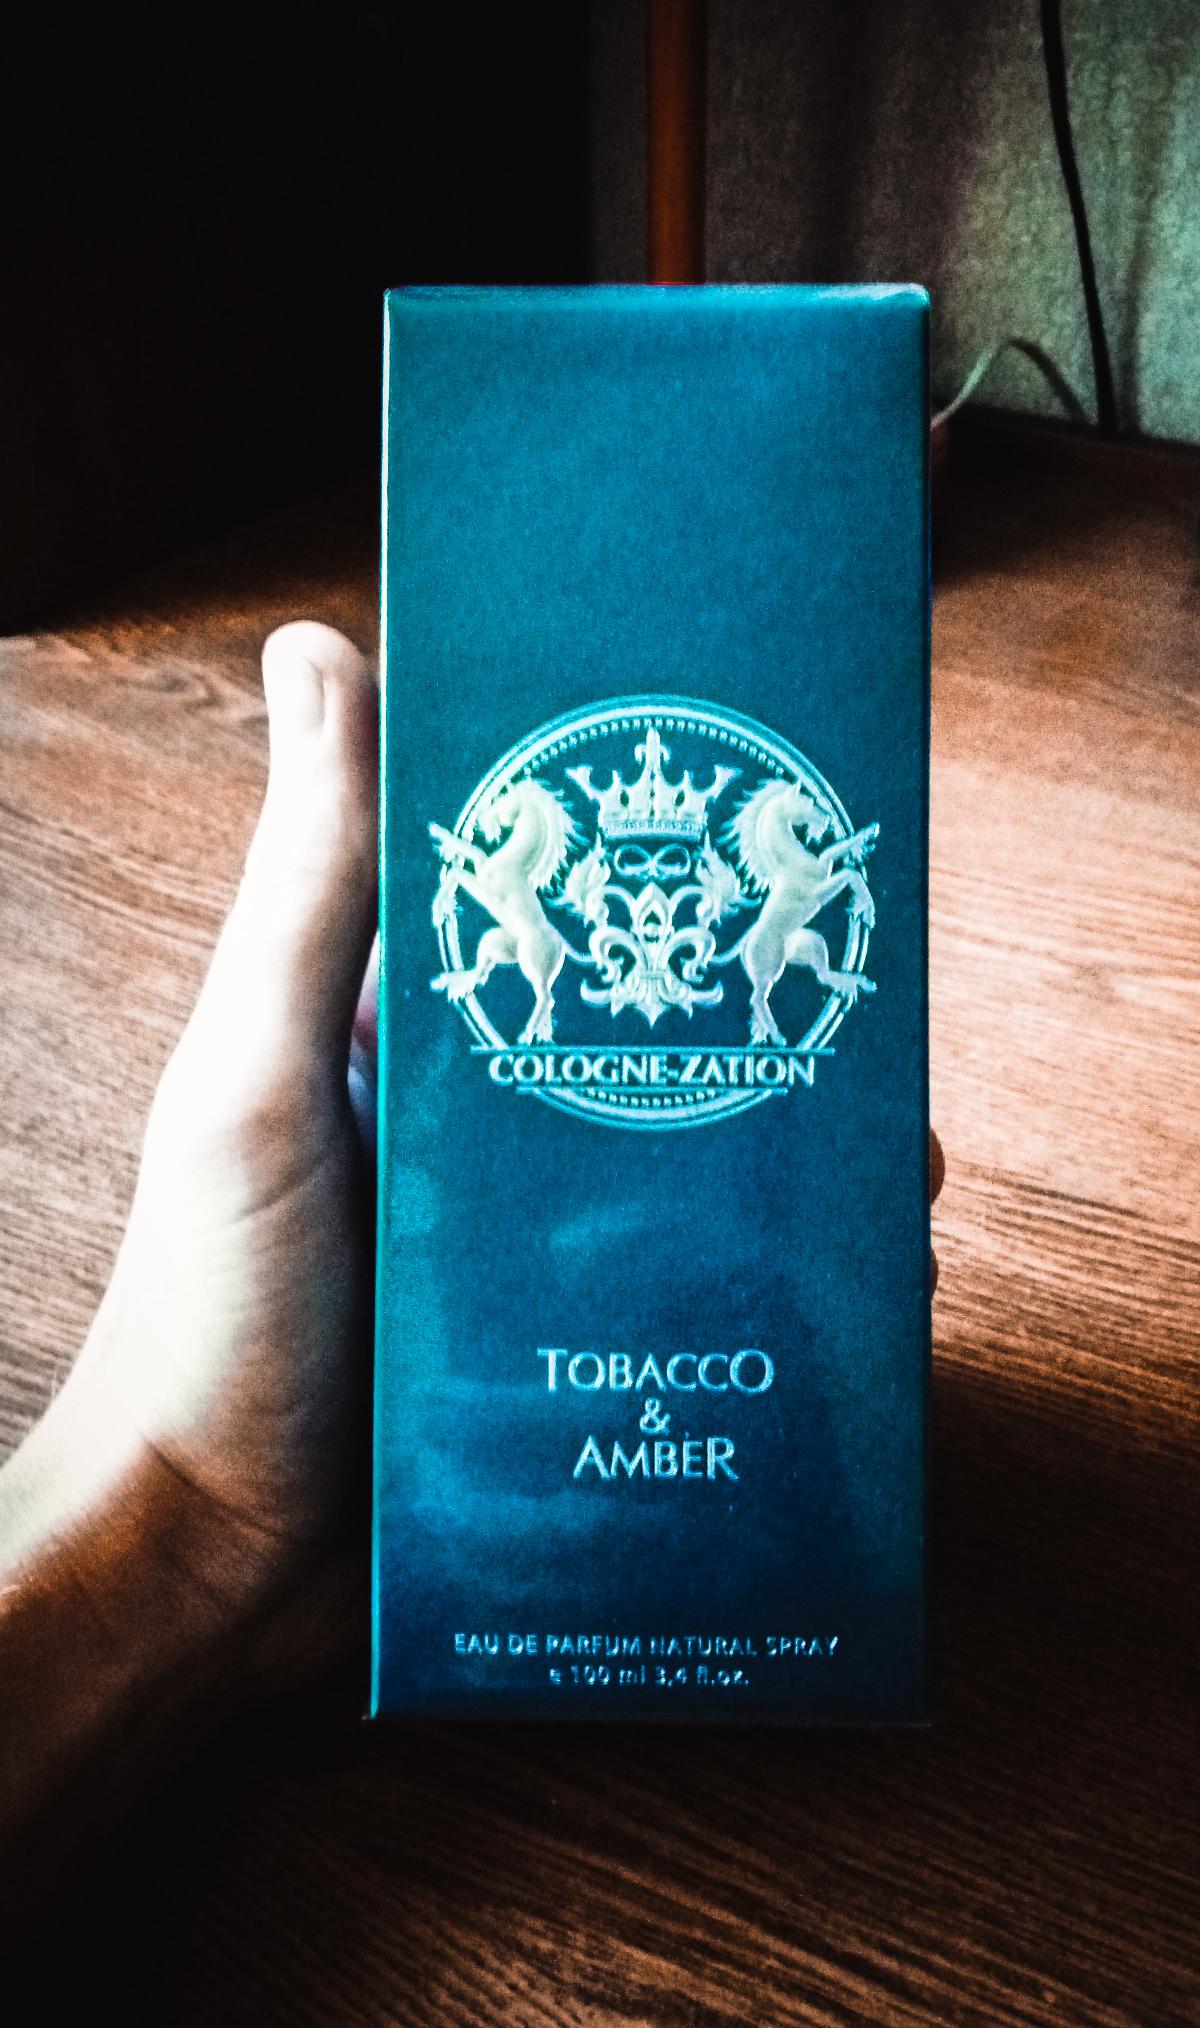 Tobacco & Amber Cologne-Zation 香水- 一款2019年中性香水